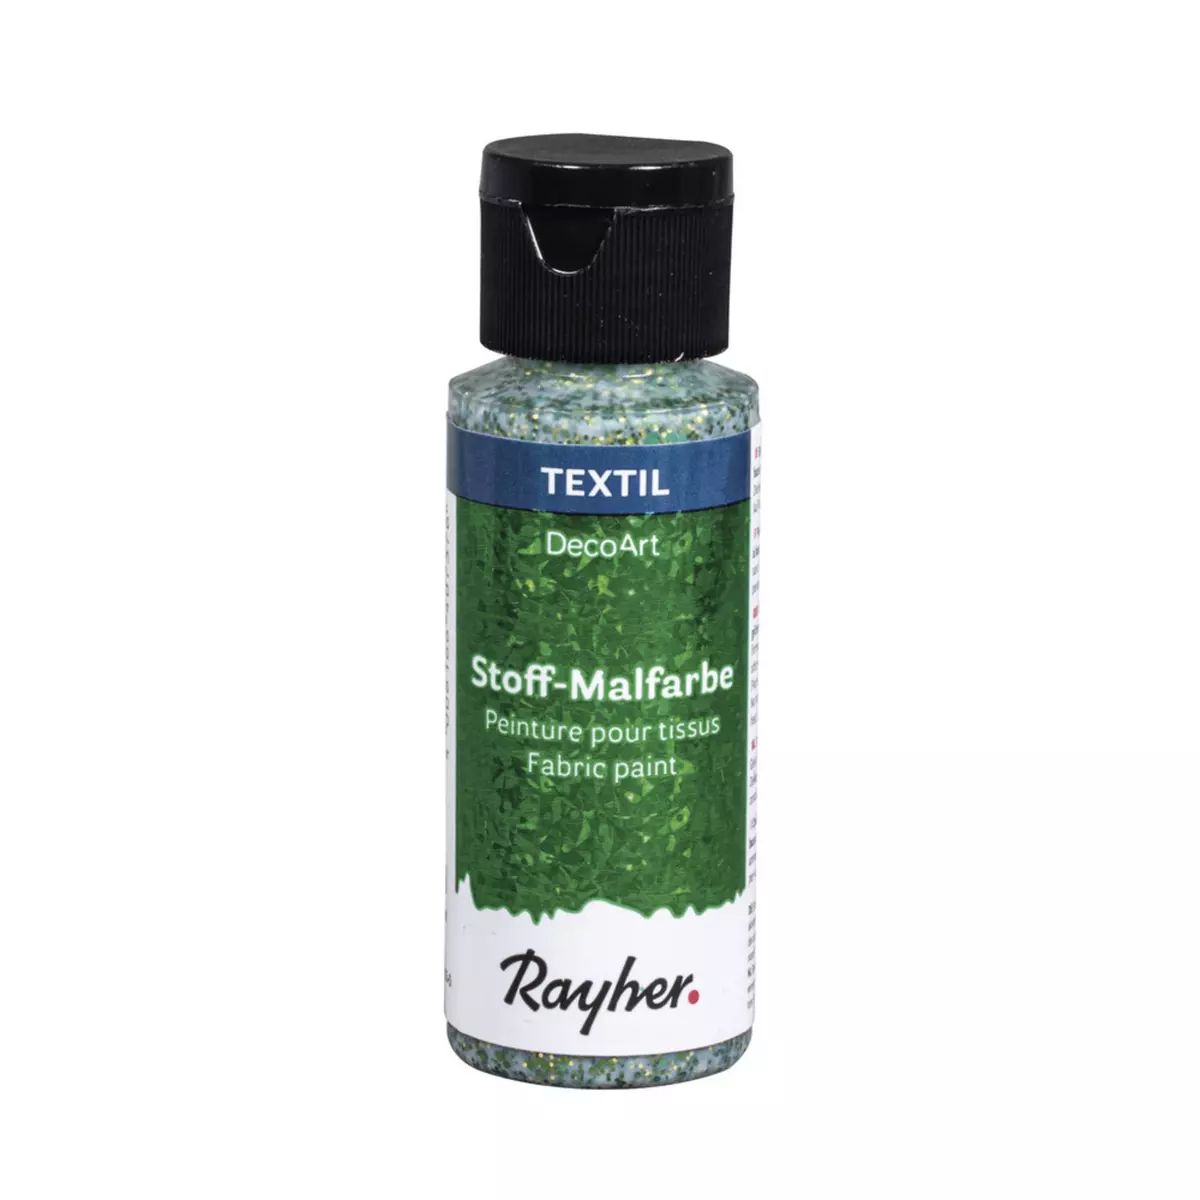 Rayher Peinture pour tissus Extrême Paillettes, vert orient, flacon 59ml